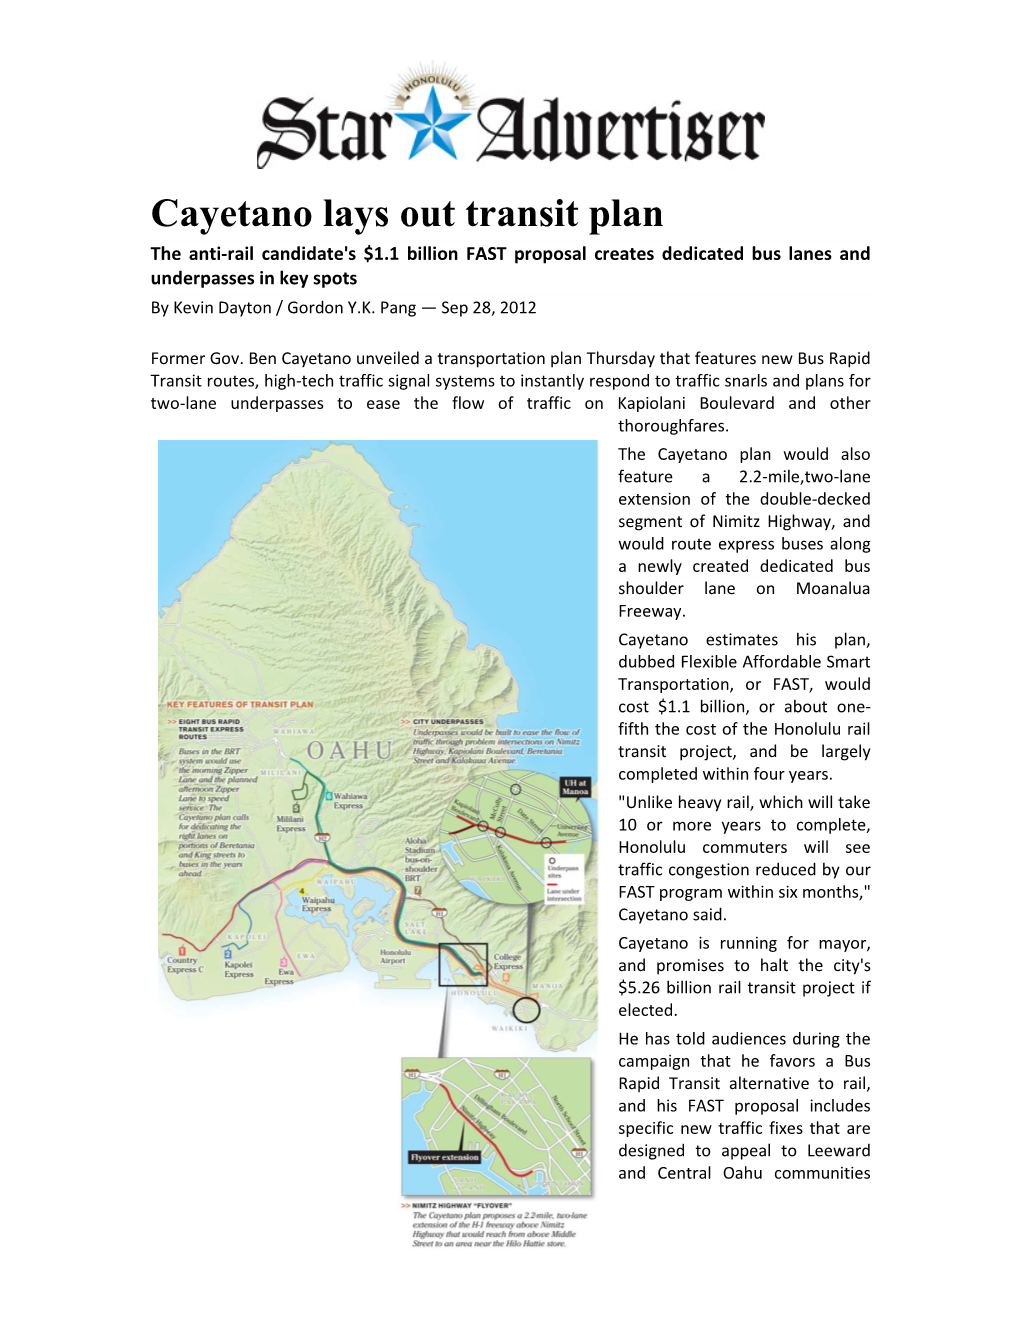 Cayetano Lays out Transit Plan